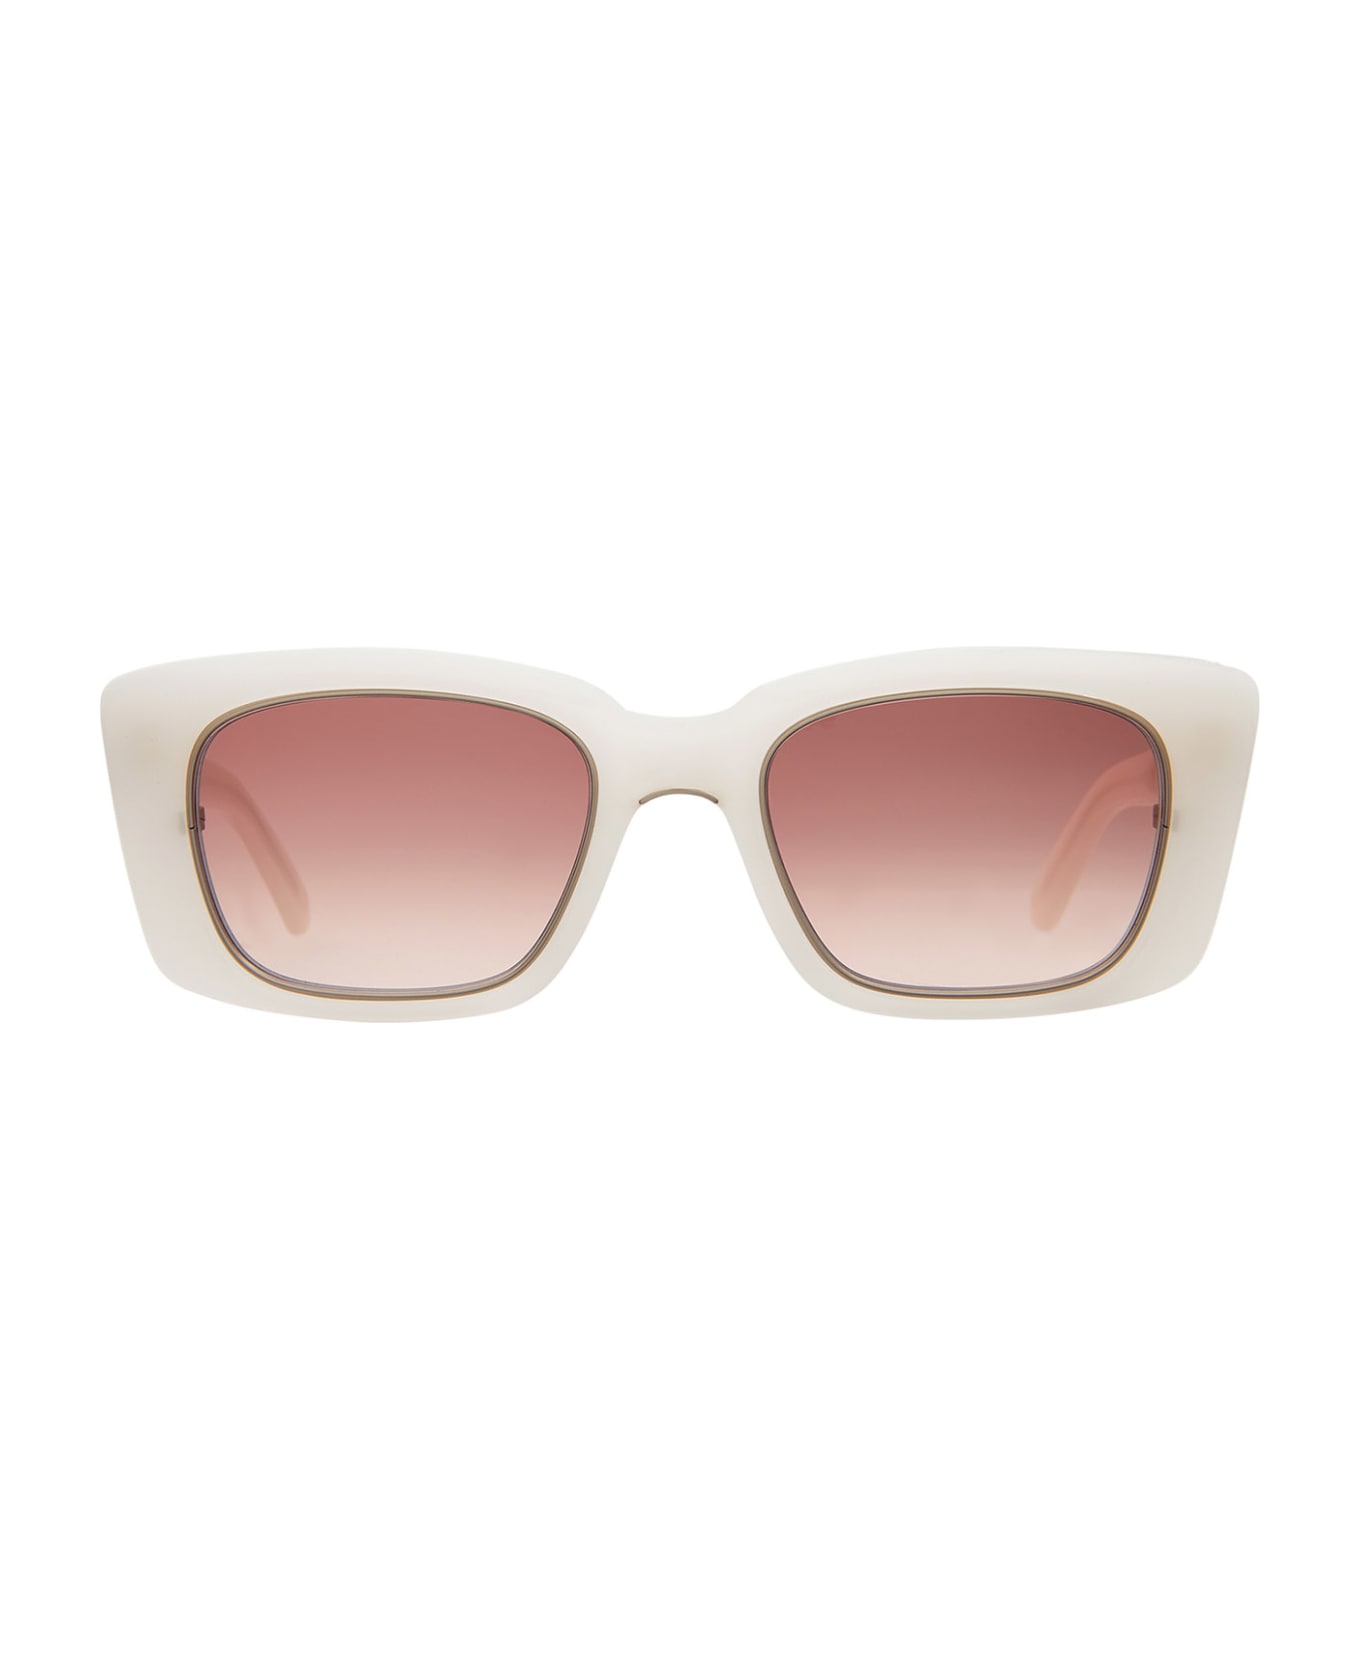 Mr. Leight Carman S Porcelain-matte 12k White Gold Piave sunglasses - DITA EYEWEAR Narcissus Piave sunglasses